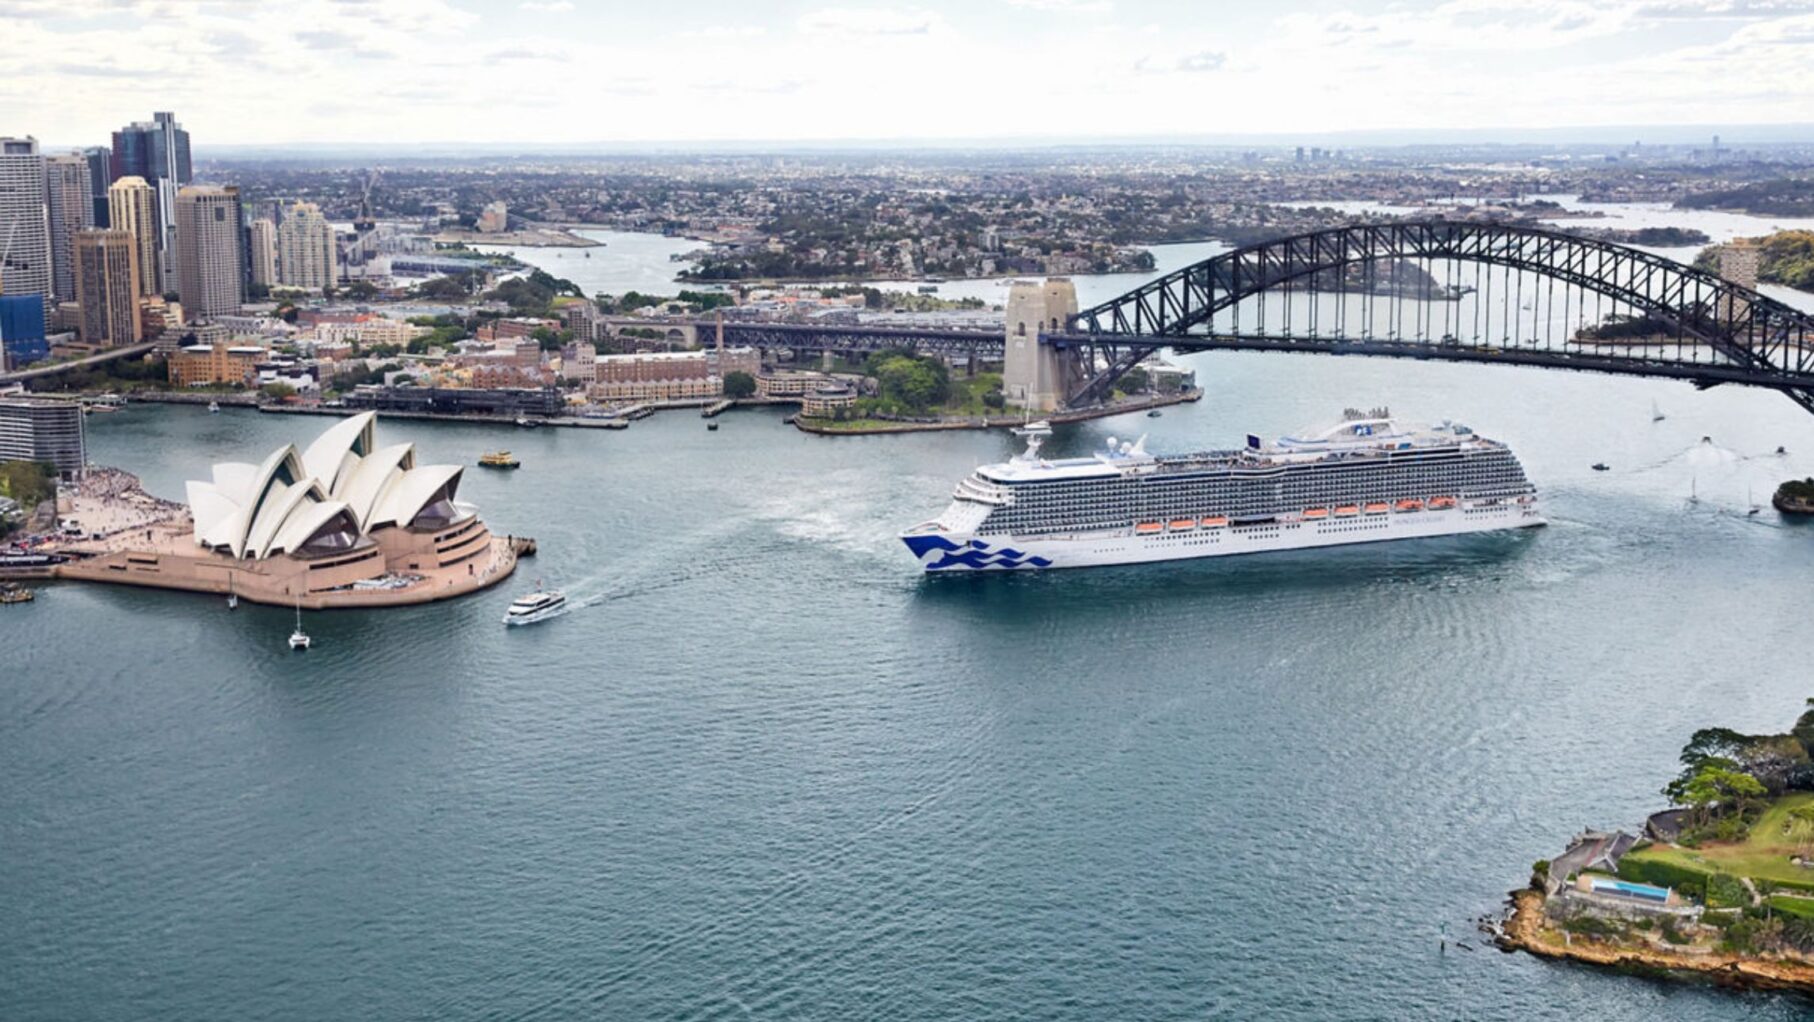 Cruising in Australia with Princess ship and Sydney Harbour Bridge